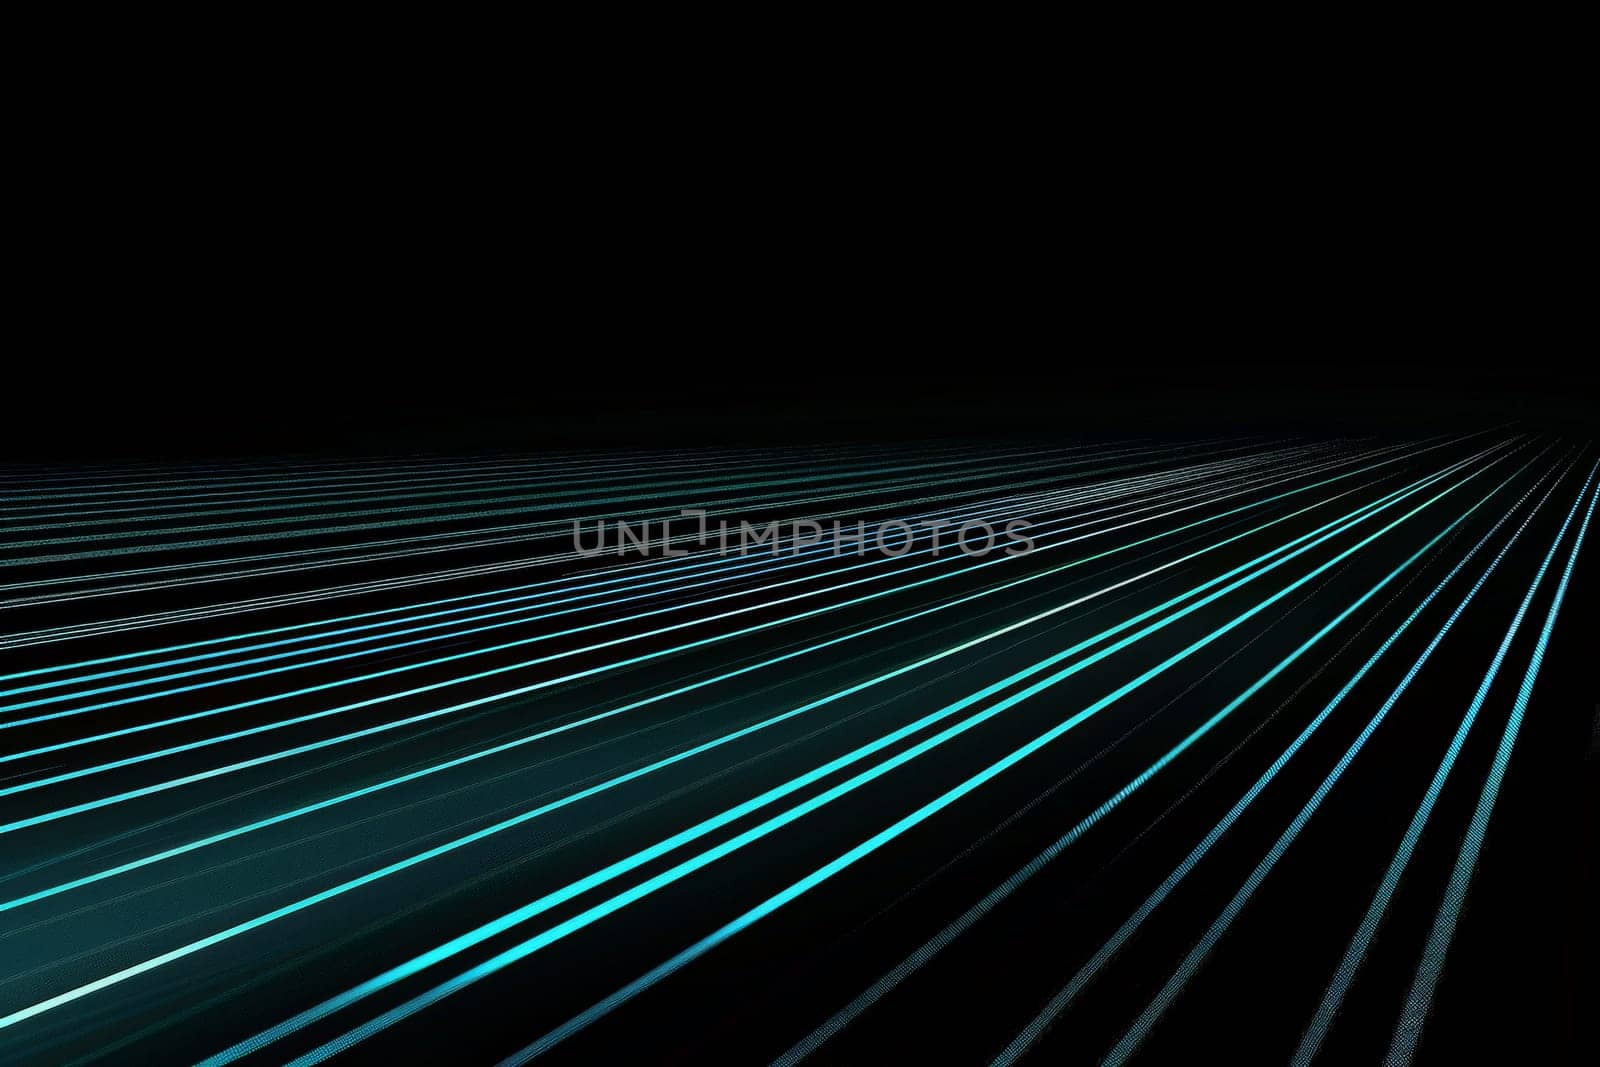 horizontal gridlines light blue on black background for web design, gridlines abstract background.